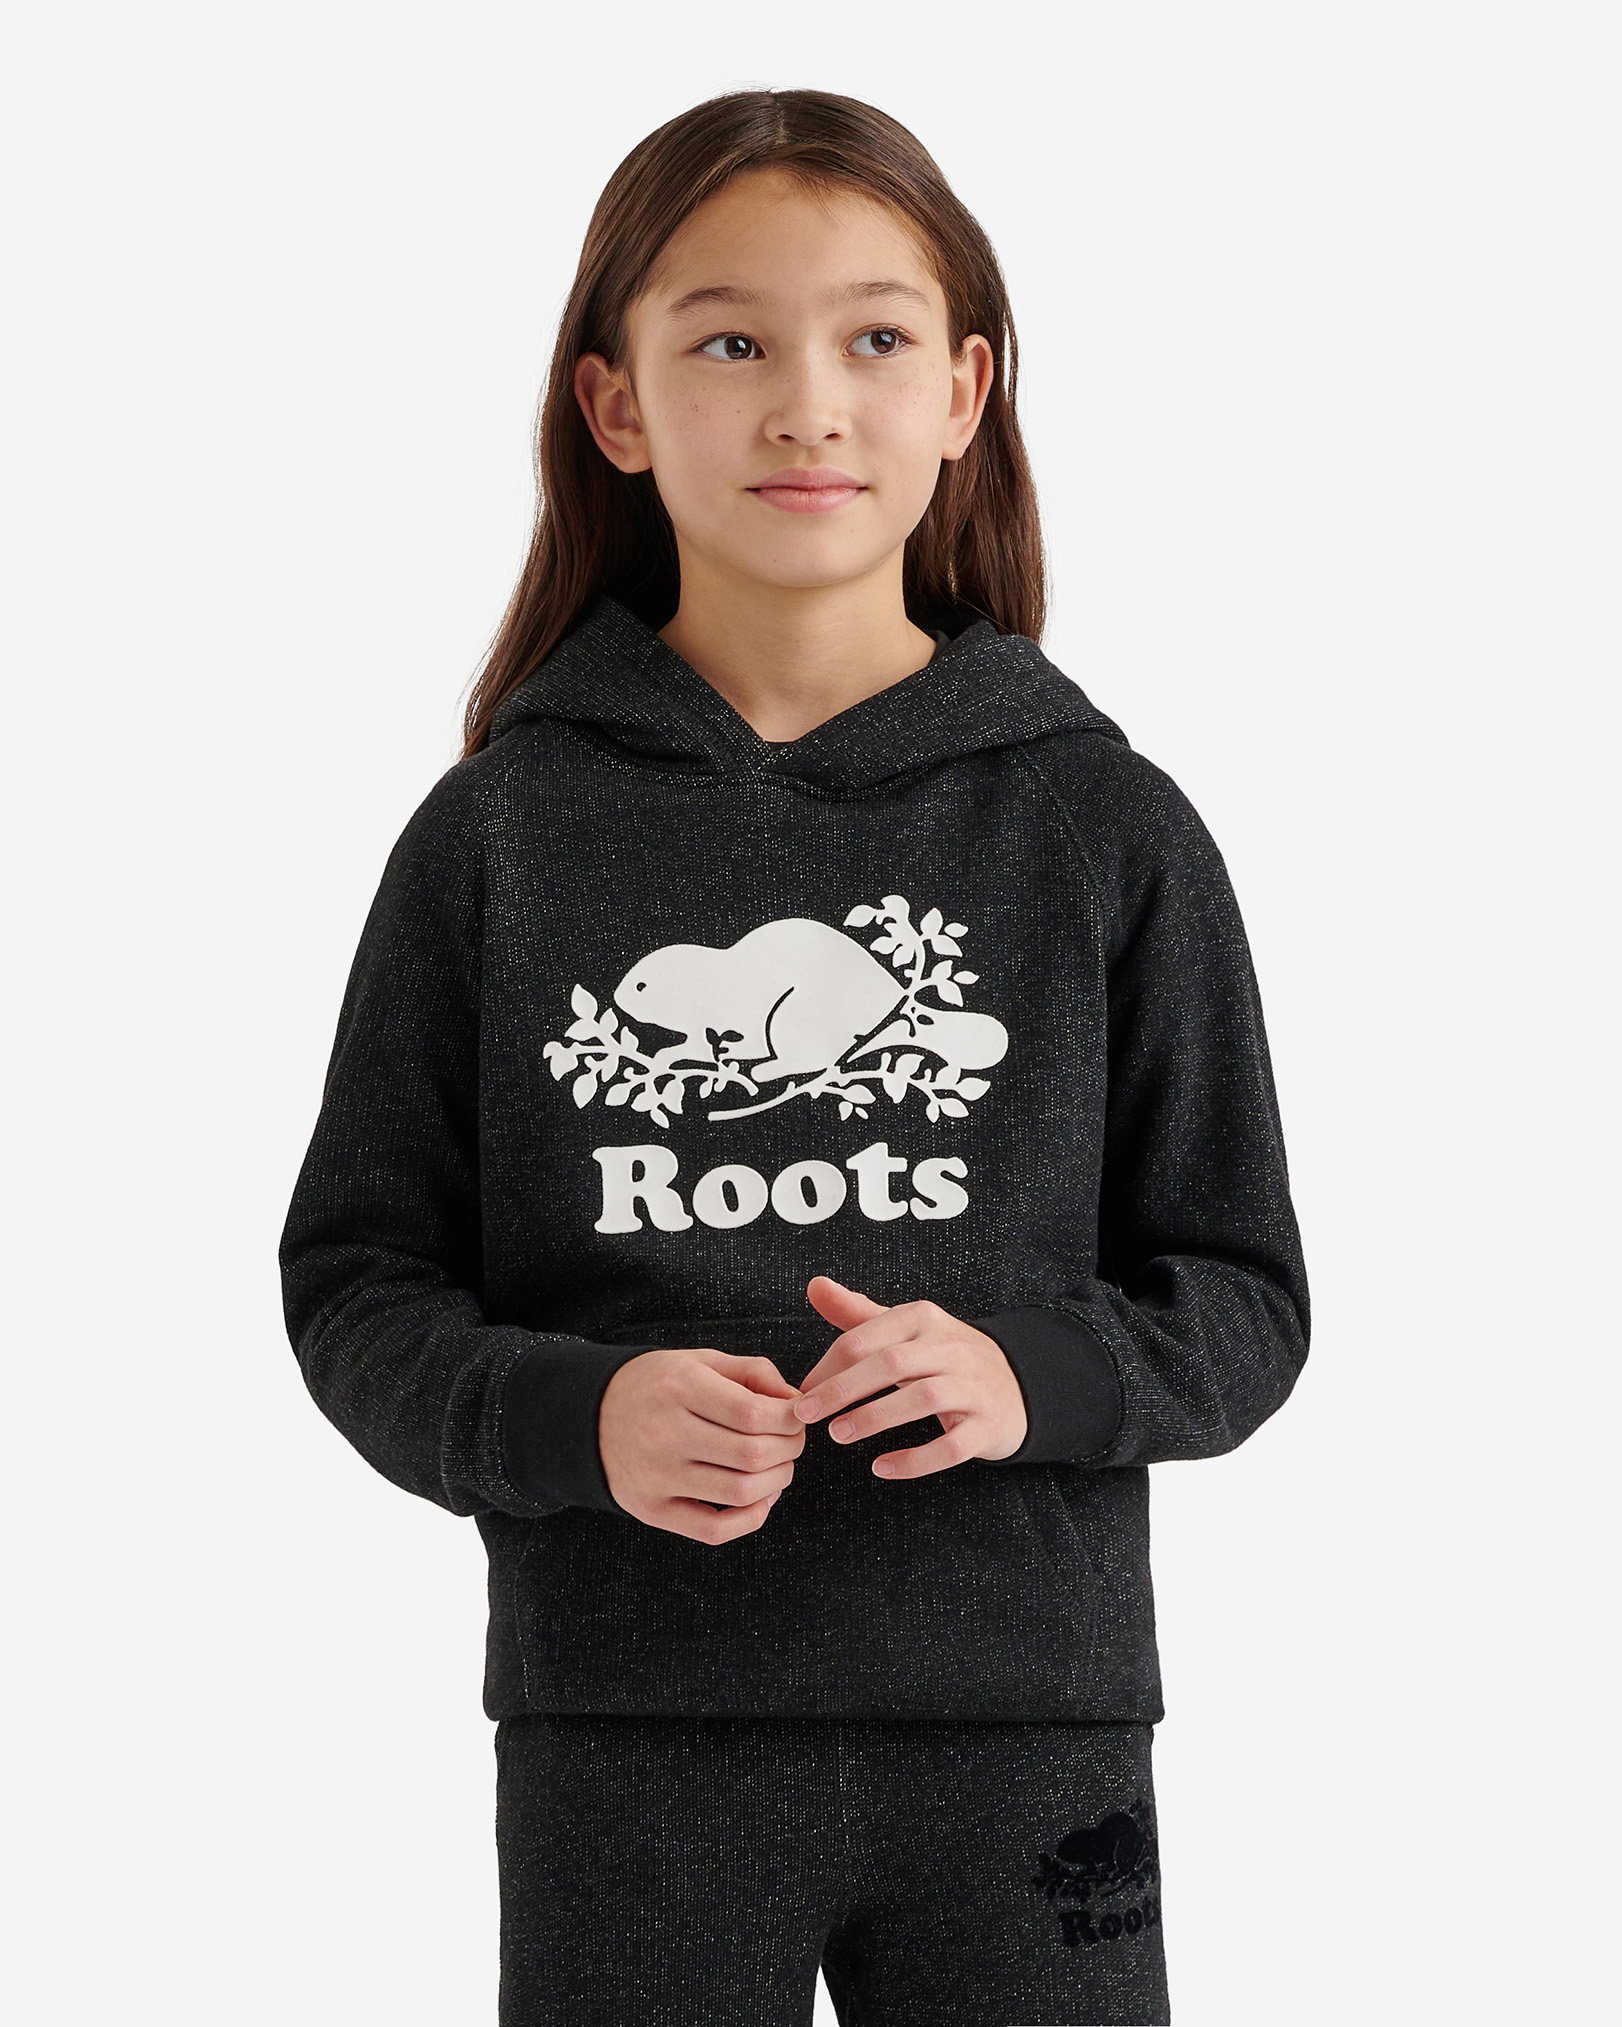 Roots Kids Organic Original Kanga Hoodie Jacket in Black Pepper